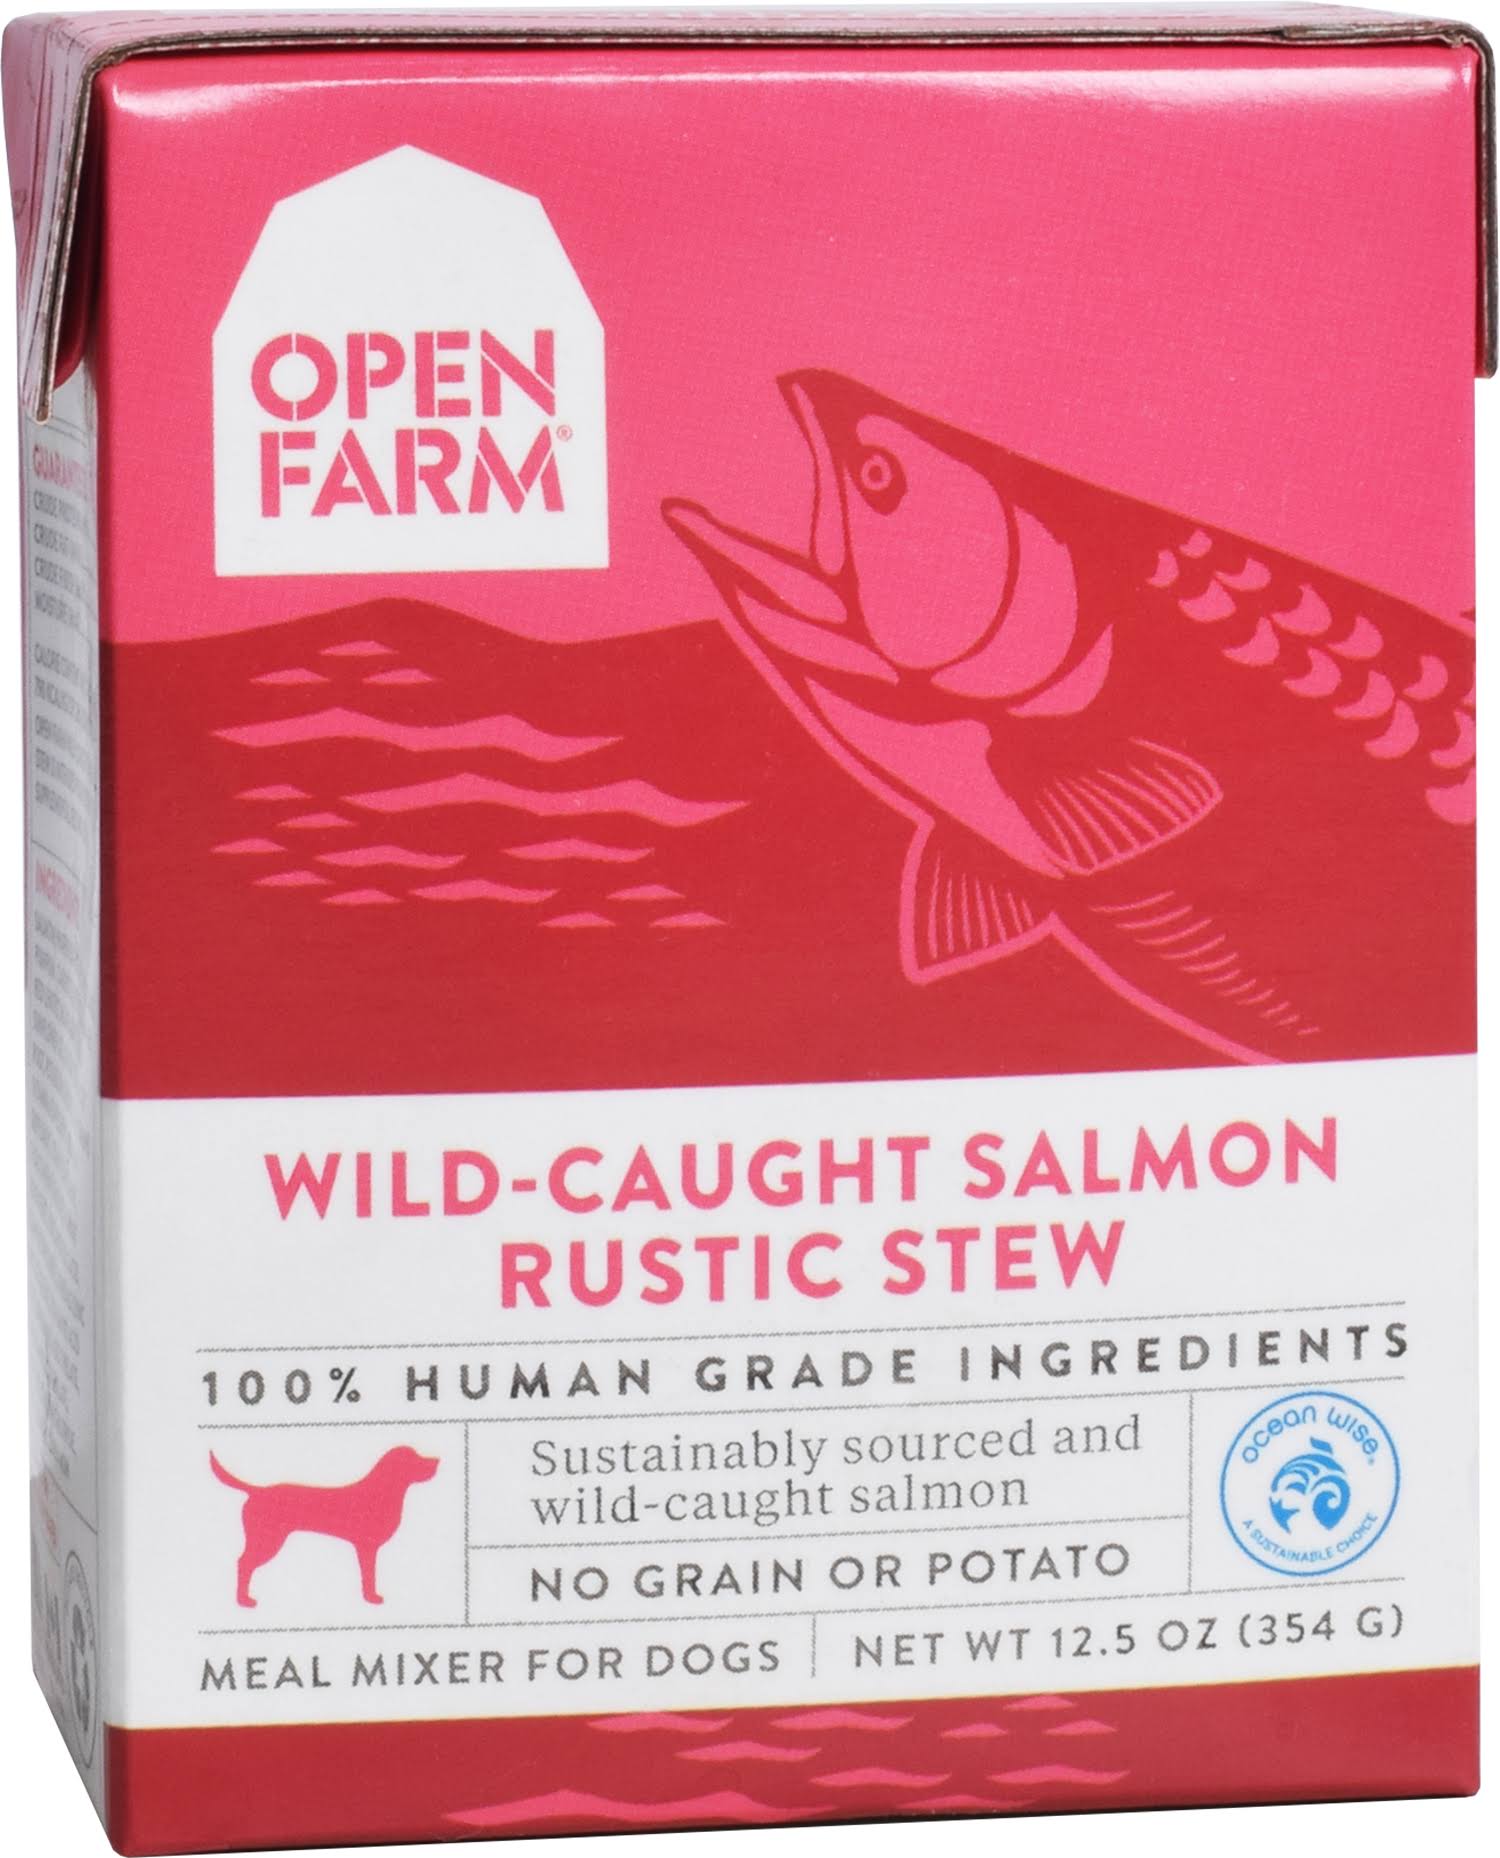 Open Farm Rustic Stew Wild-Caught Salmon Dog Food, 12.5 oz